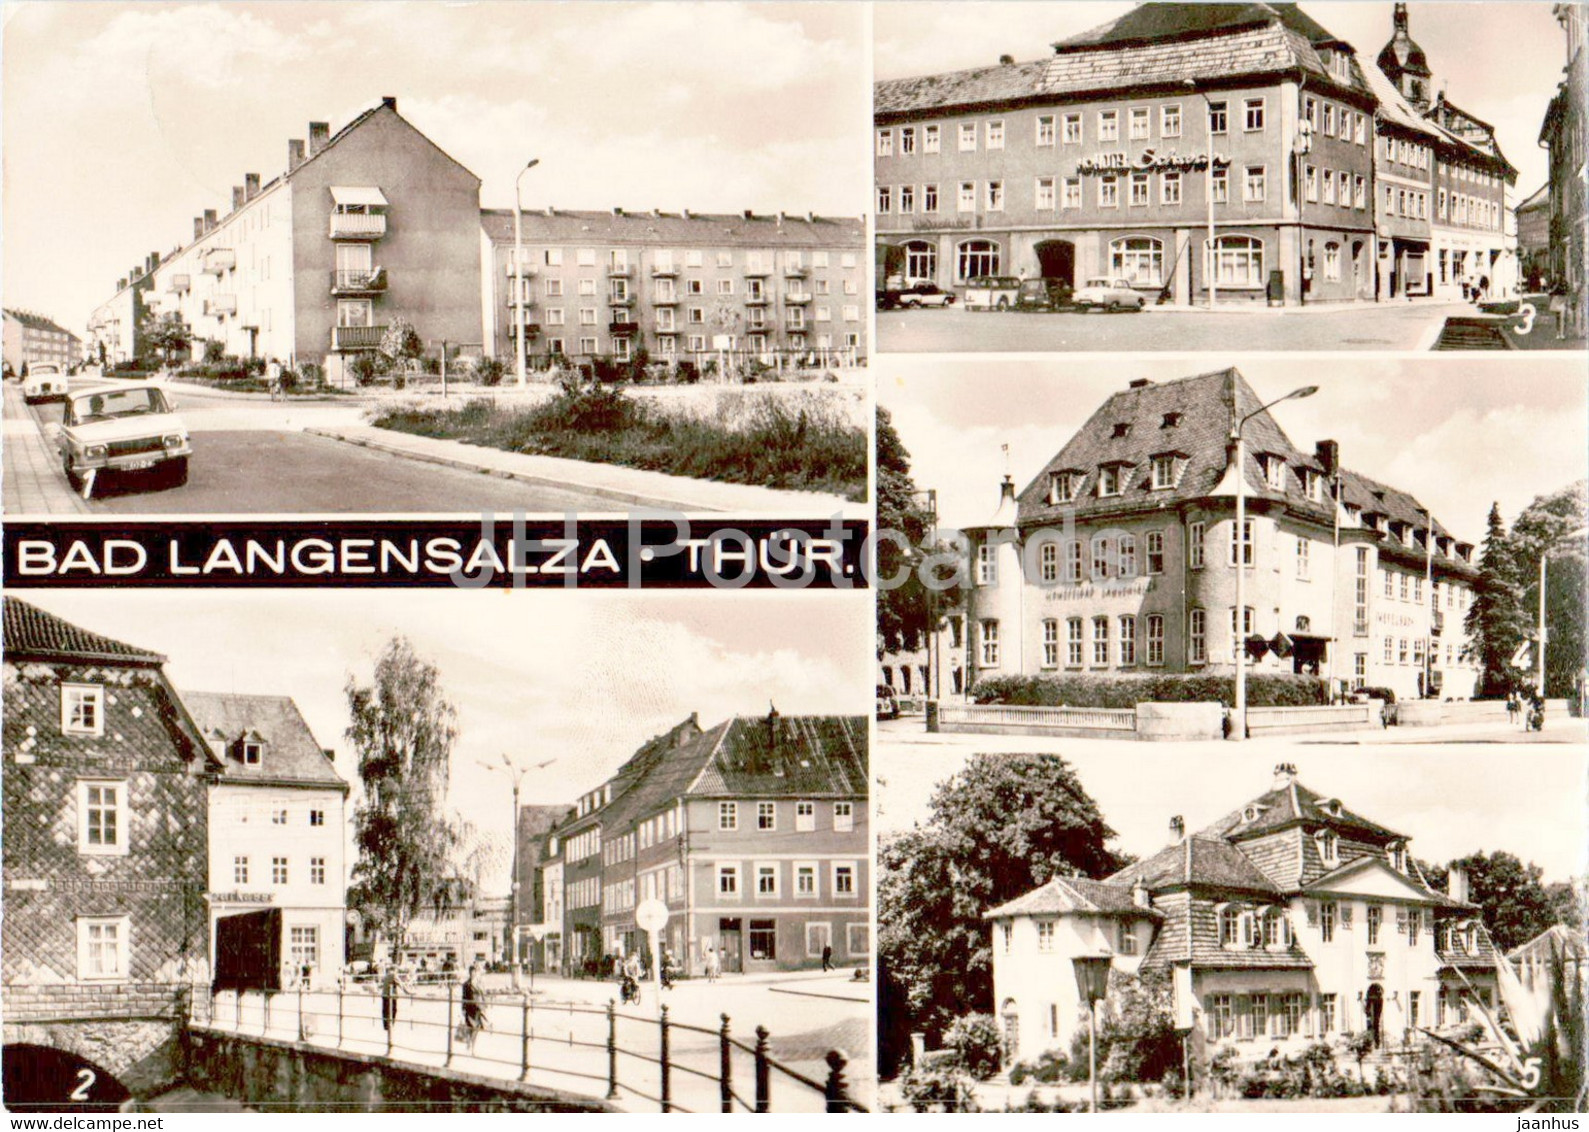 Bad Langensalza - Friedrich Hahn Strasse - Thallmanplatz - Hotel - Thur - Car - Old Postcard - 1977 - Germany DDR - Used - Bad Langensalza